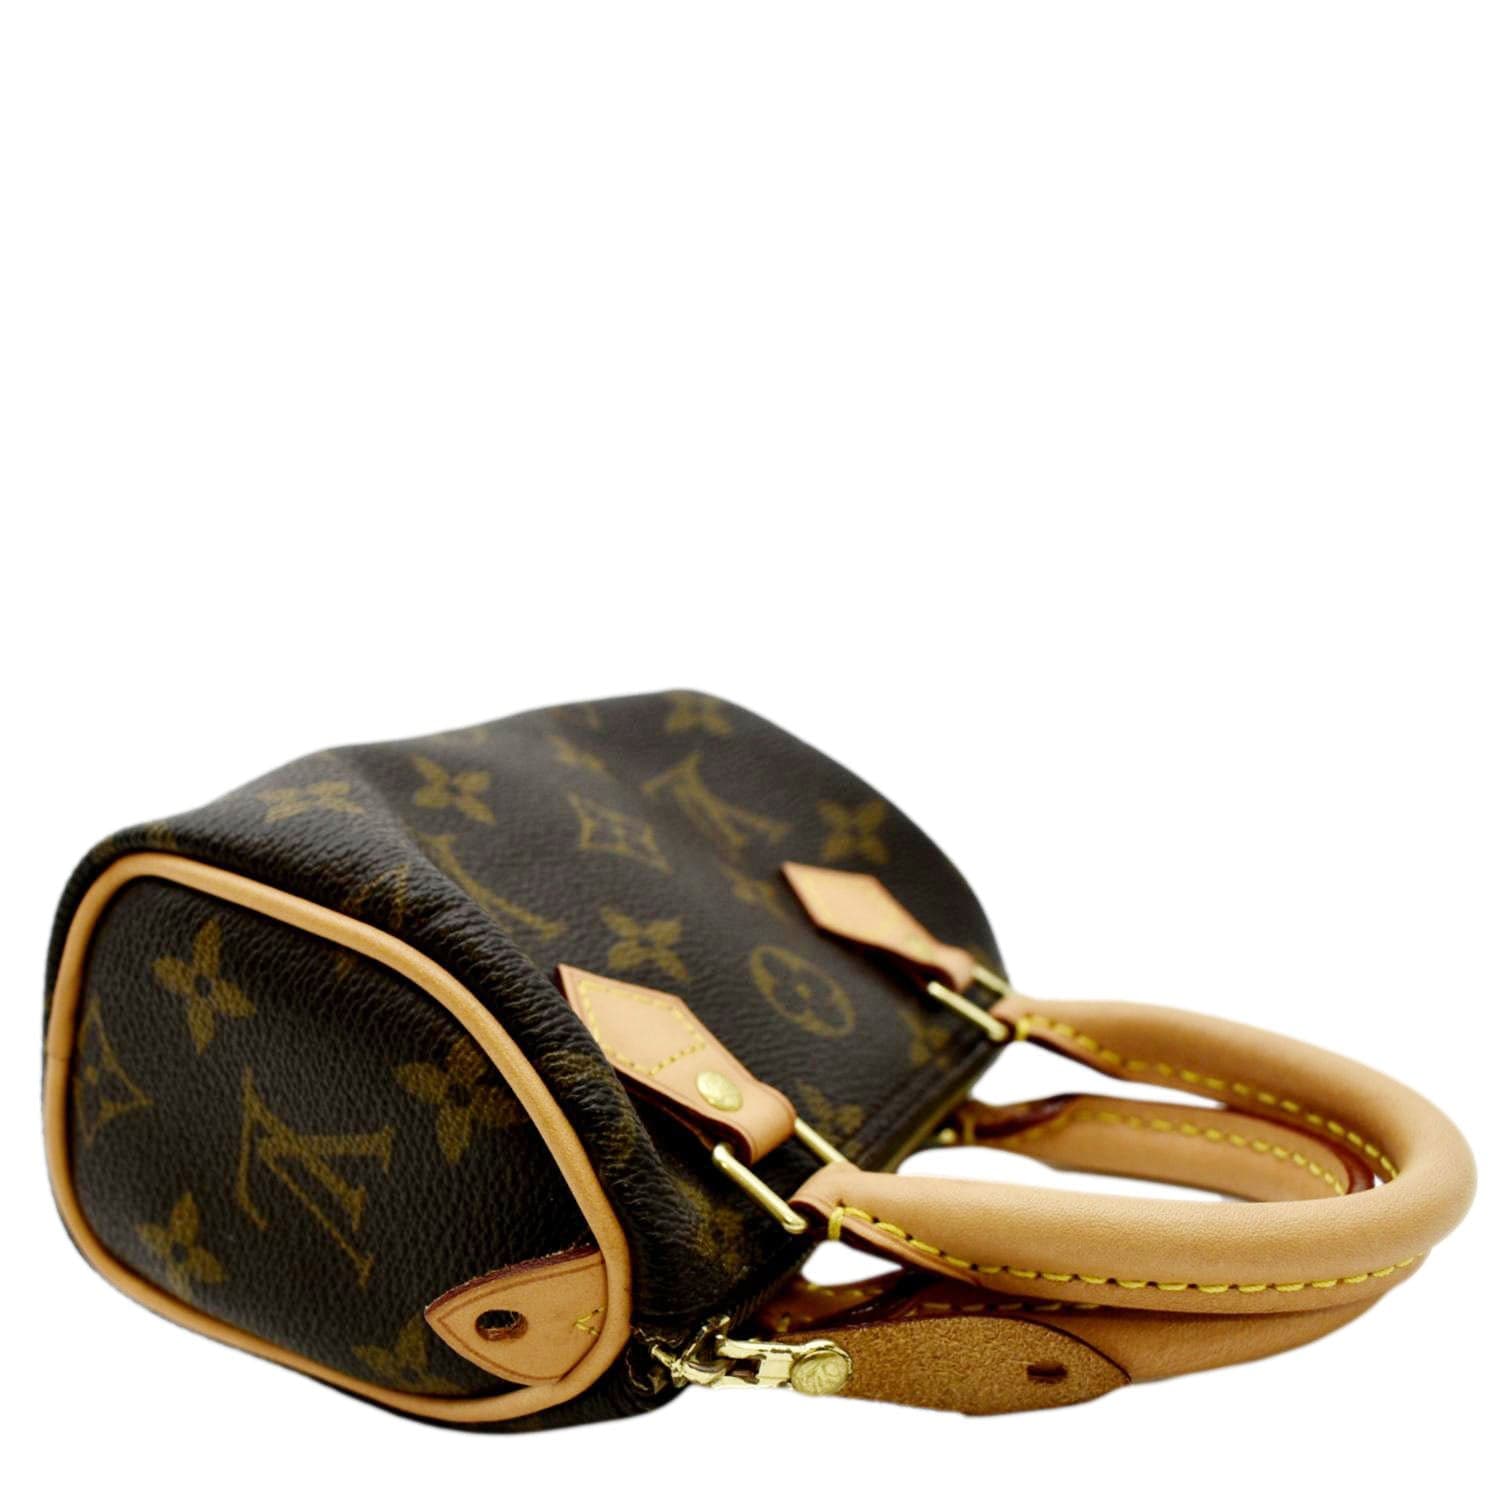 Nano speedy / mini hl leather crossbody bag Louis Vuitton Brown in